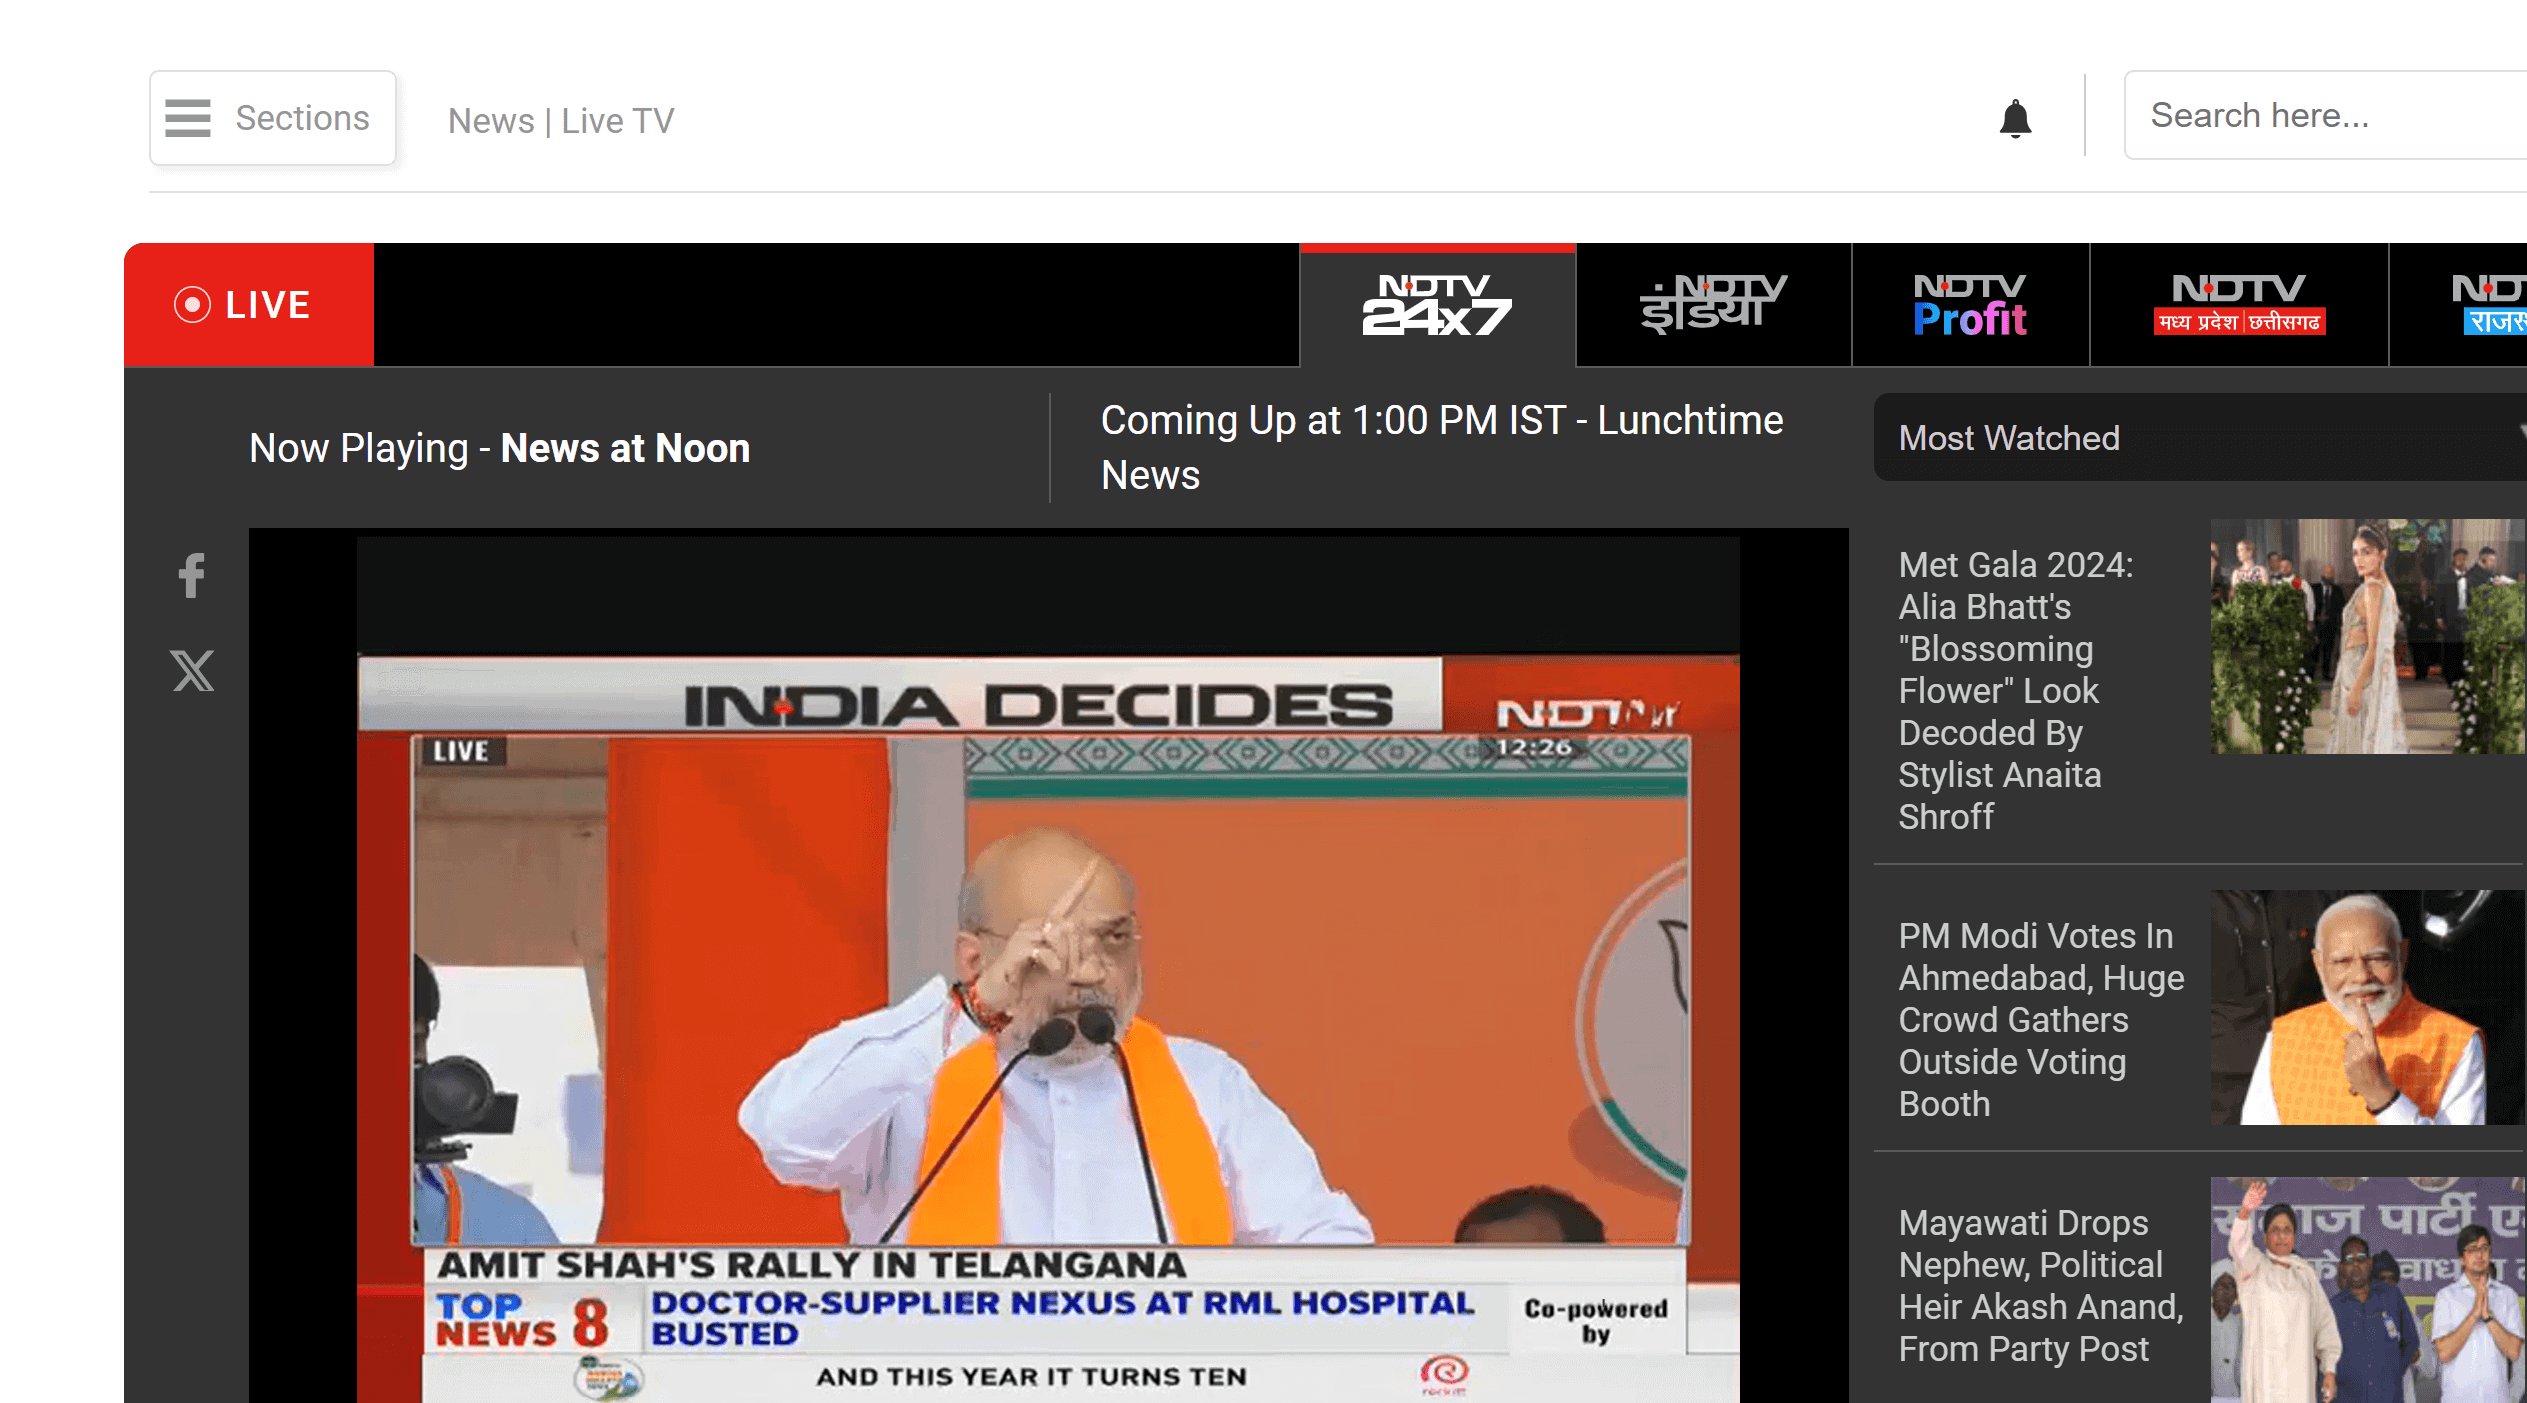 NDTV 24x7's live TV stream on their website